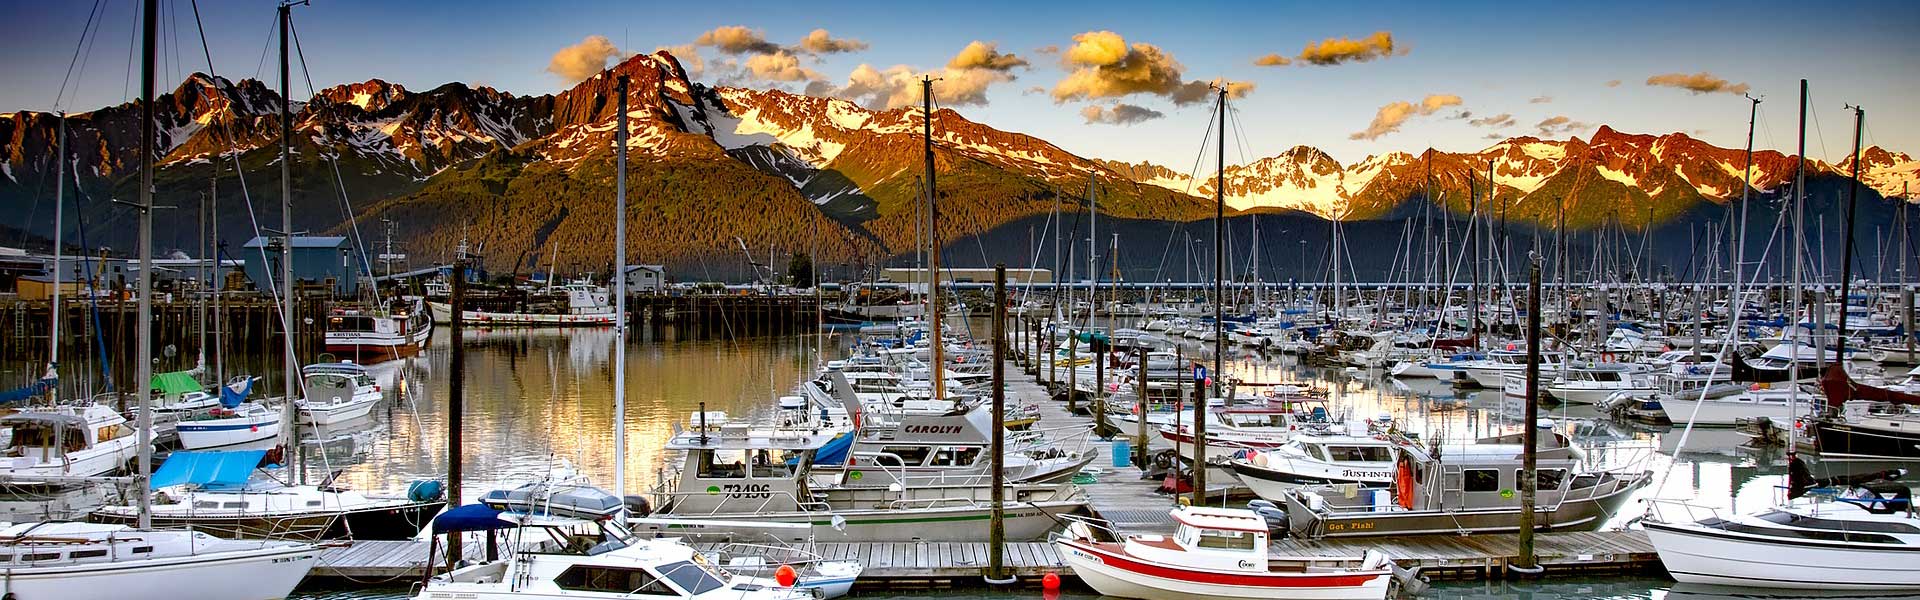 Seward | Seward Alaska Harbor Boats